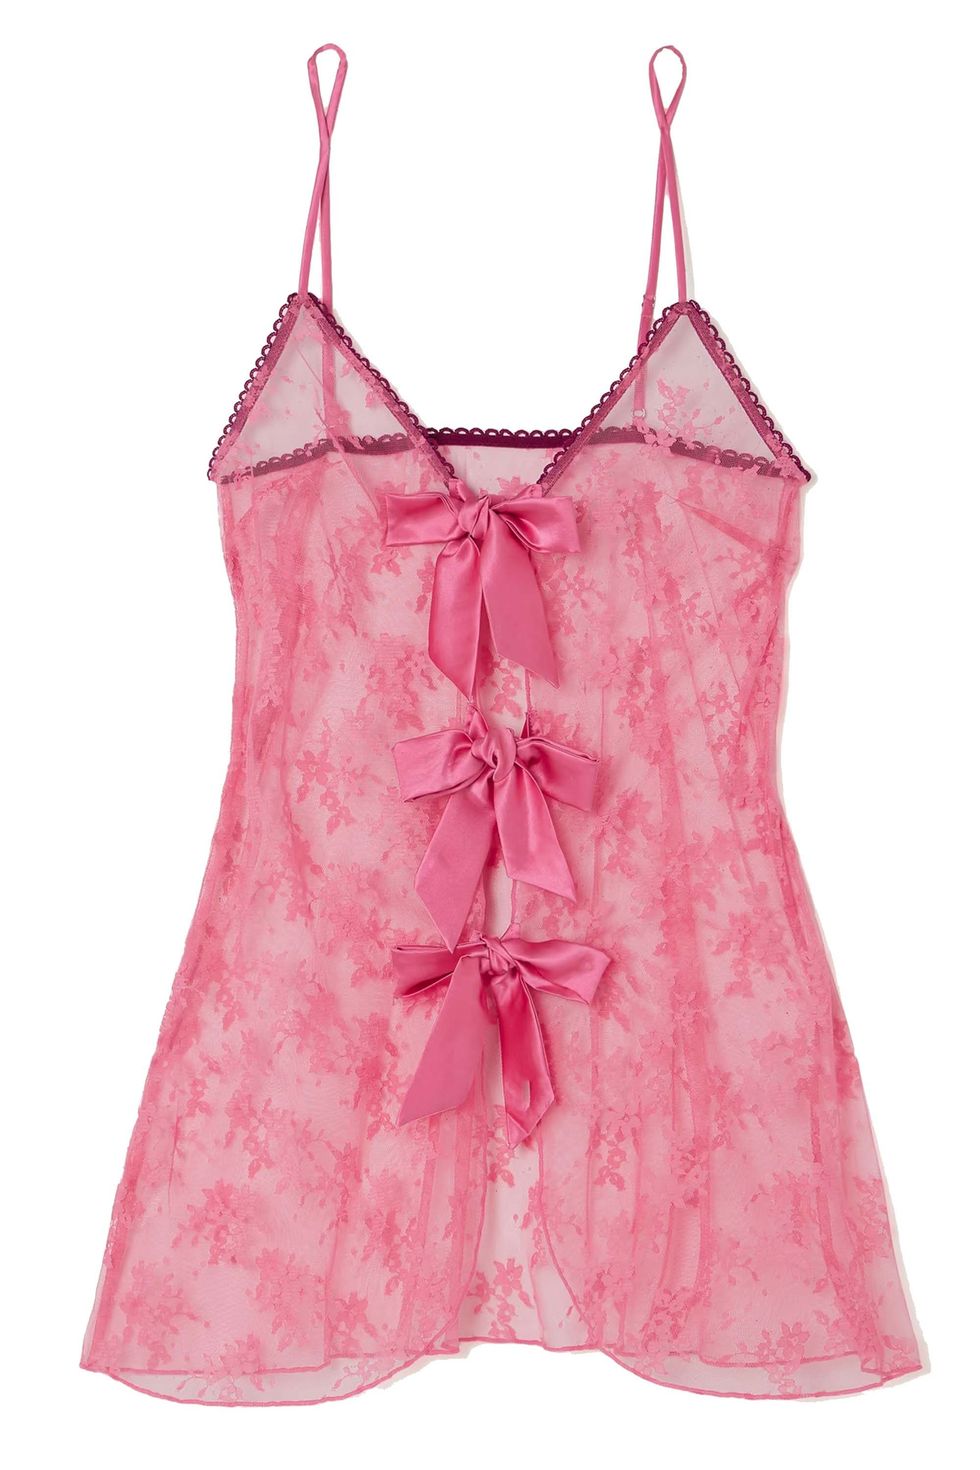 Victoria Secret Camisole Tank Top Sleepwear Love Print Black Pink Lace  Satin New